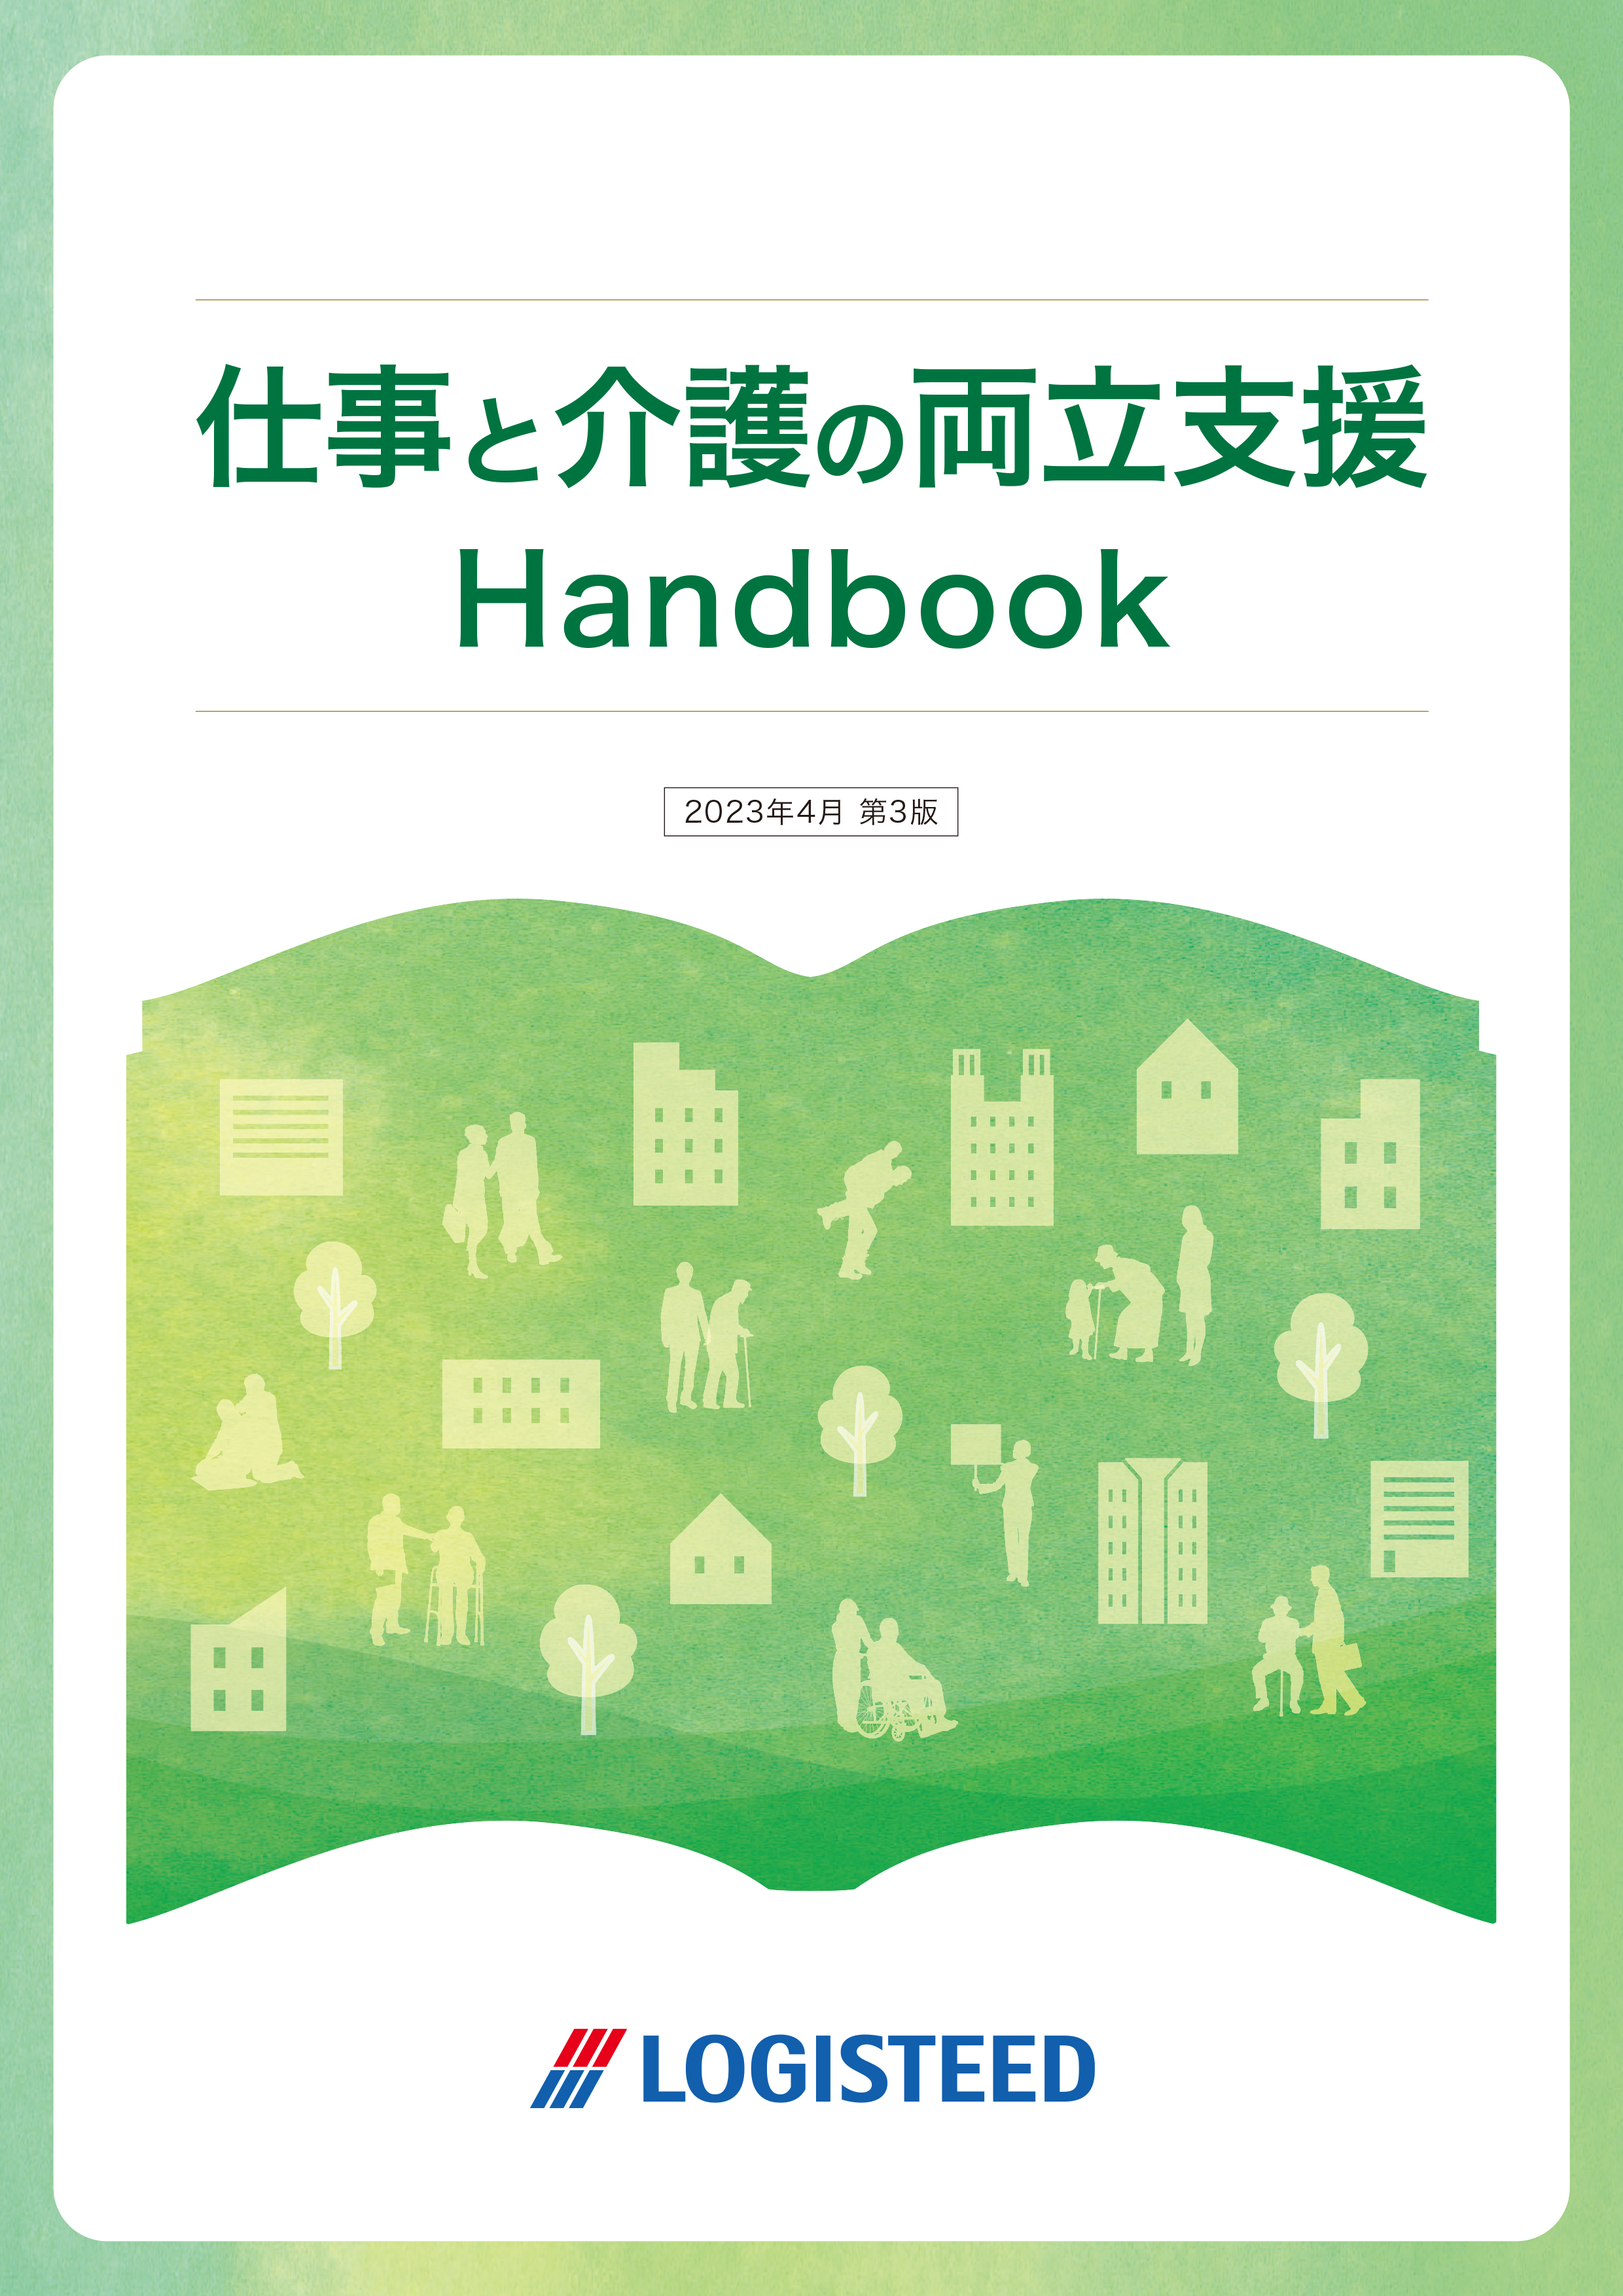 Handbook for Supporting Balancing Work and Nursing Care